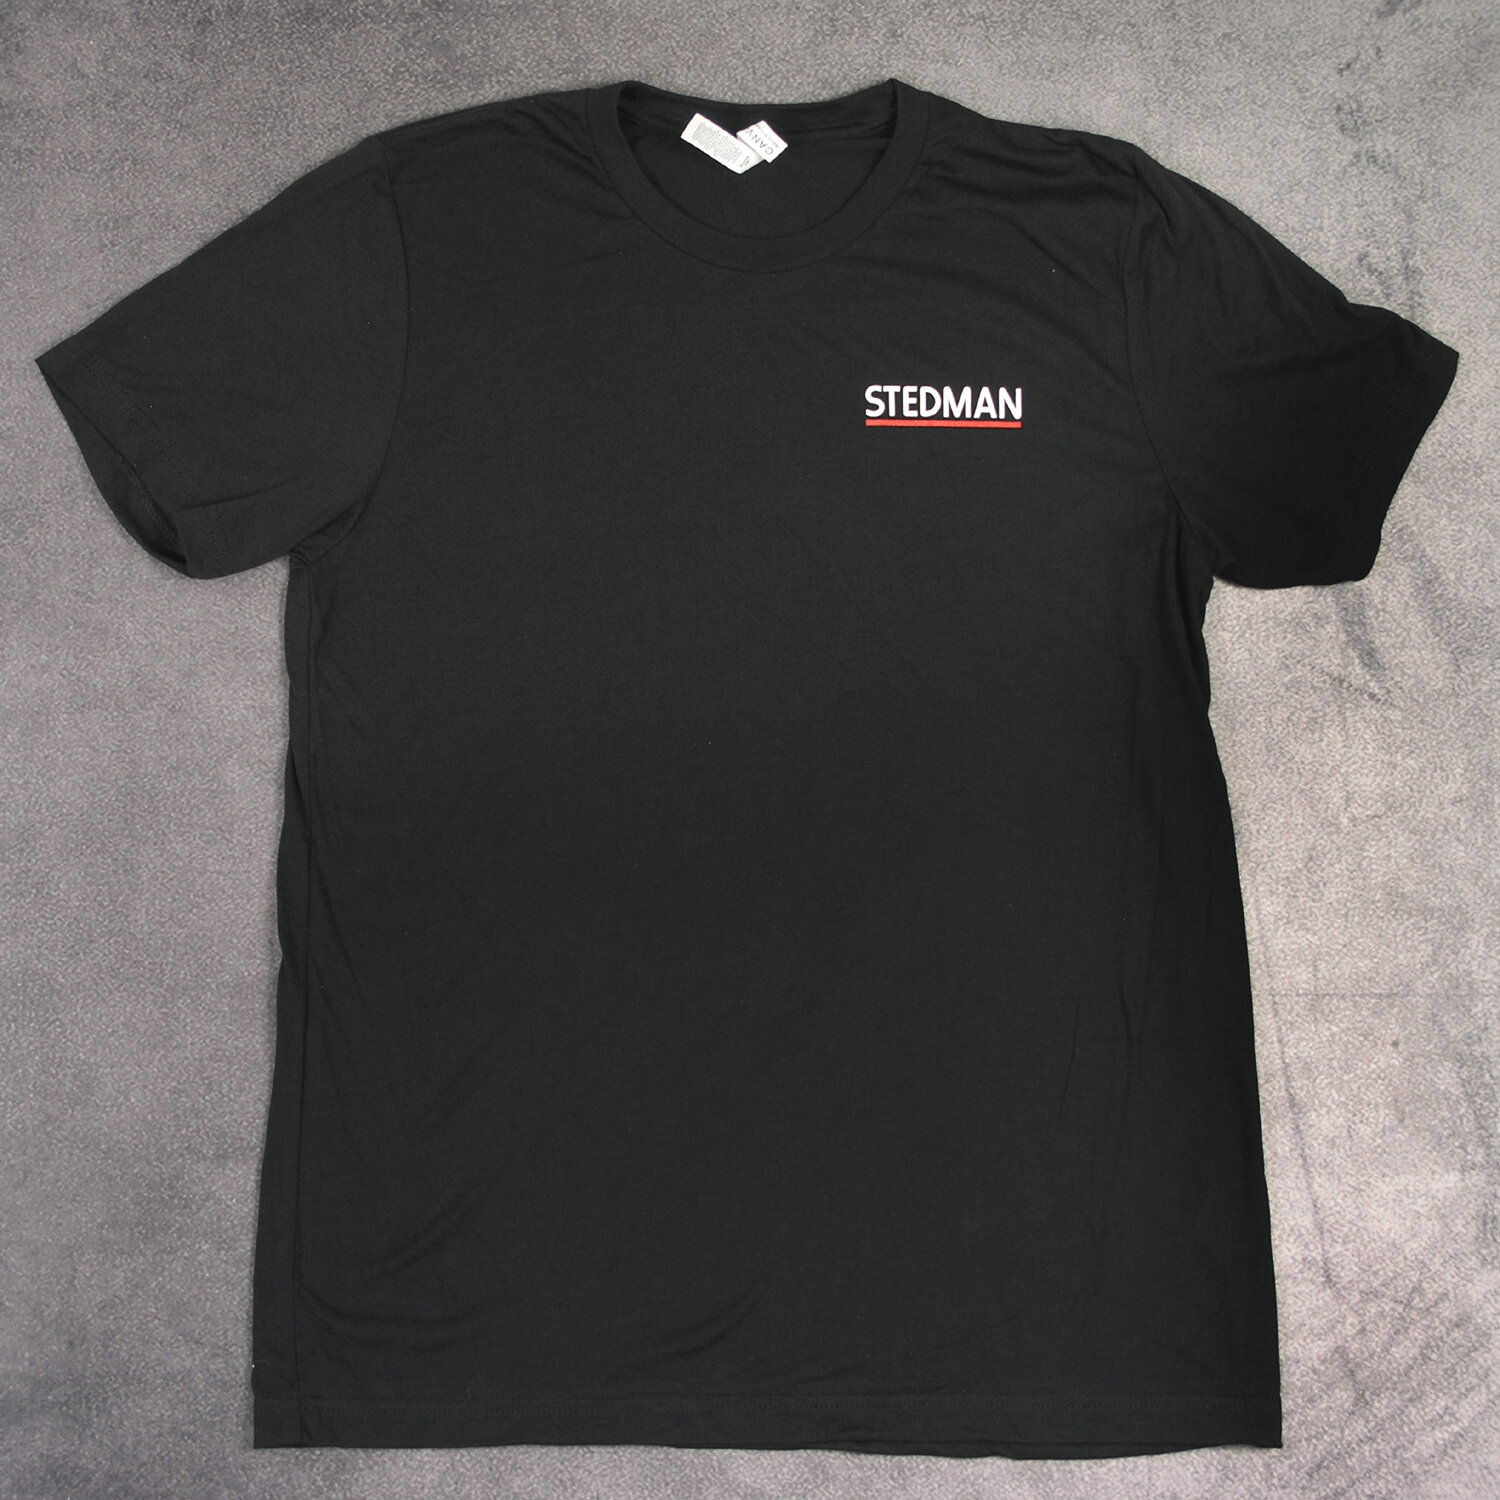 aIDS tåbelig tvivl Stedman Tools T-shirt (back of shirt shown) — STEDMAN